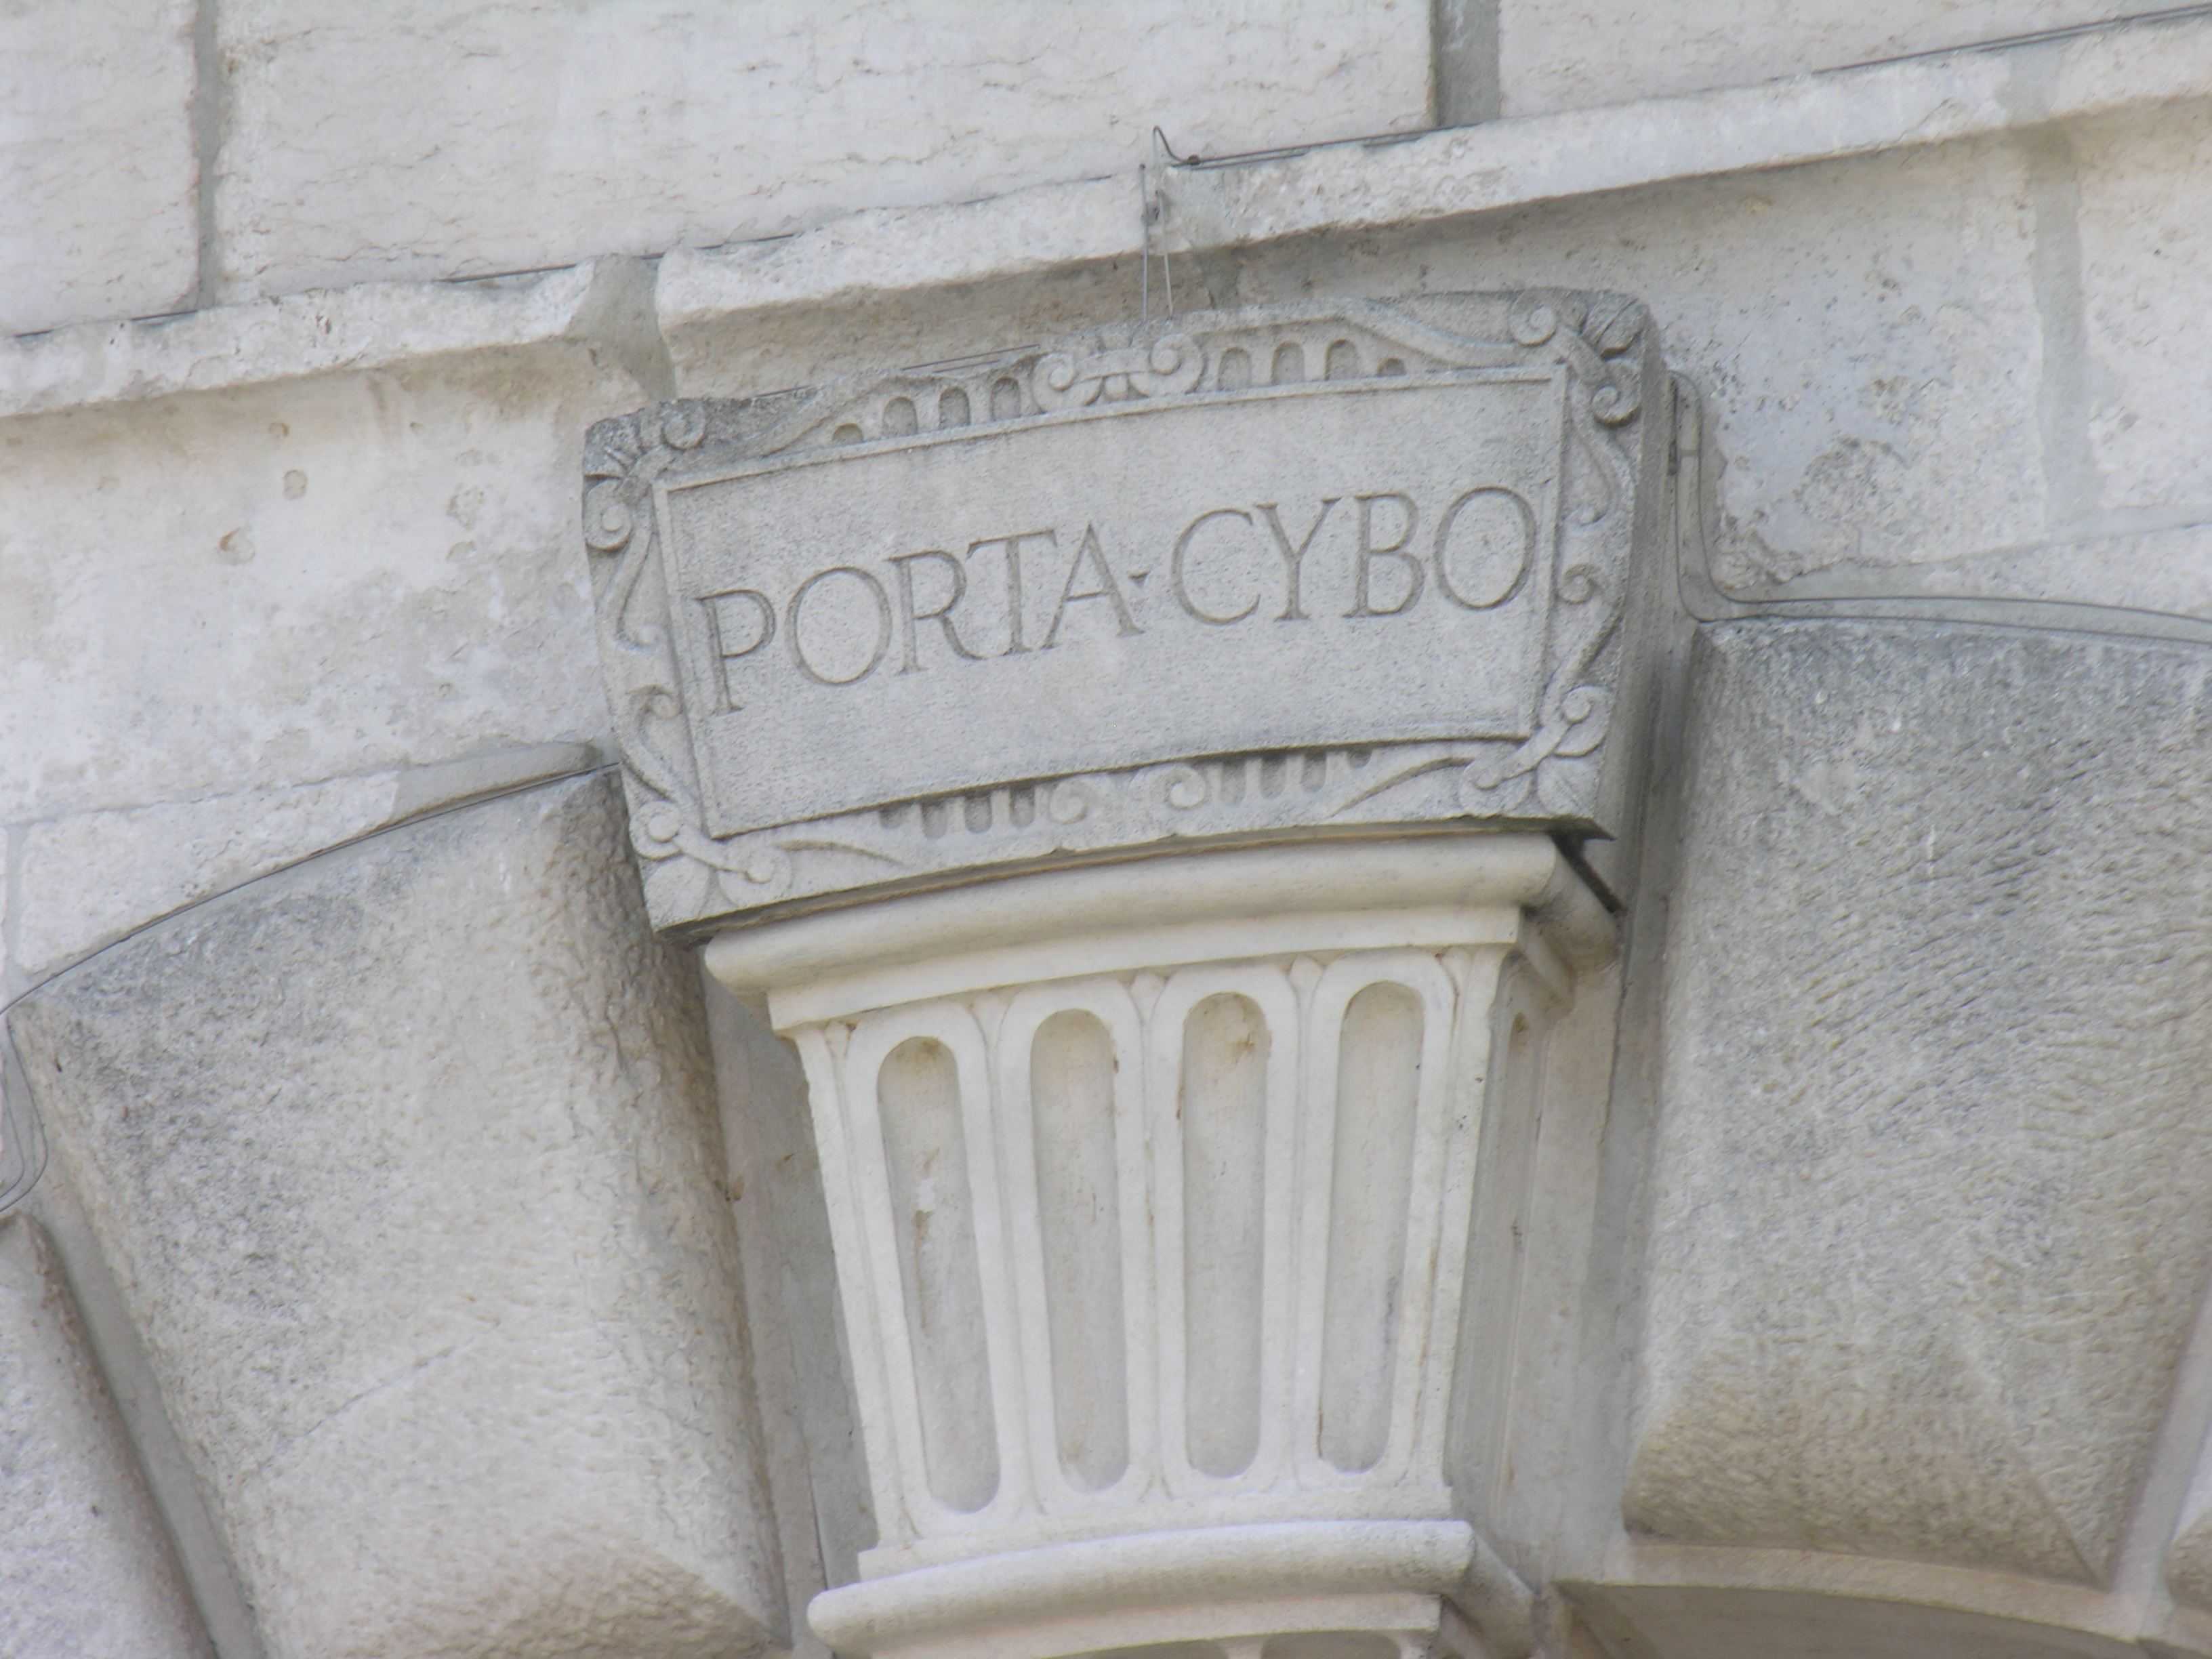 foto: https://upload.wikimedia.org/wikipedia/commons/4/40/Porta_serrata_porta_cybo.JPG